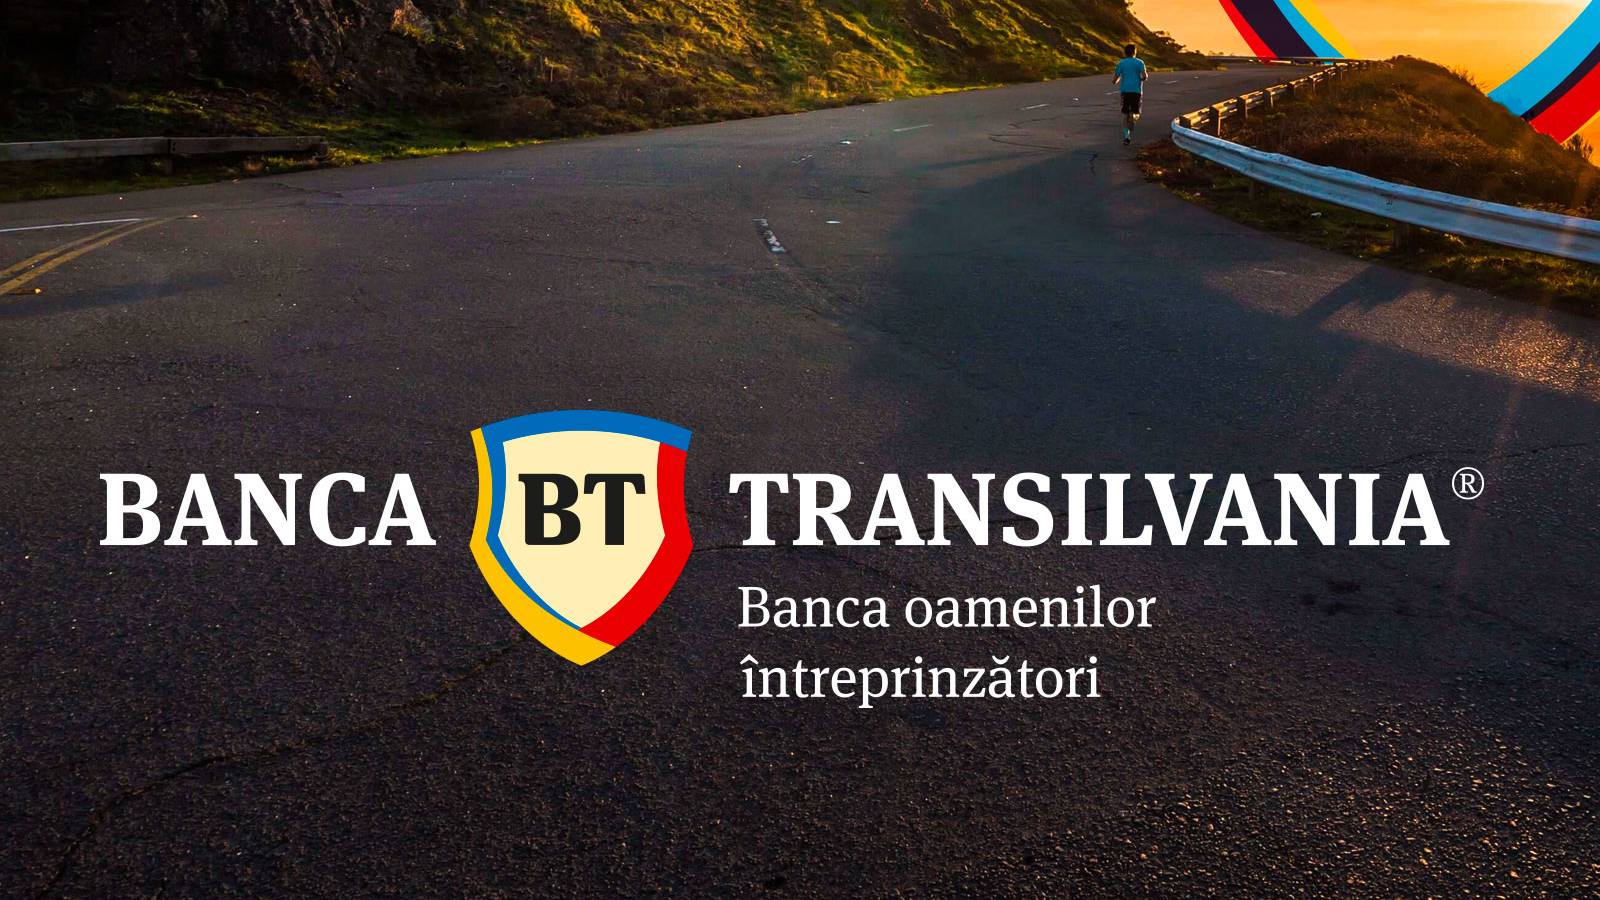 BANK Transilvania -tutka